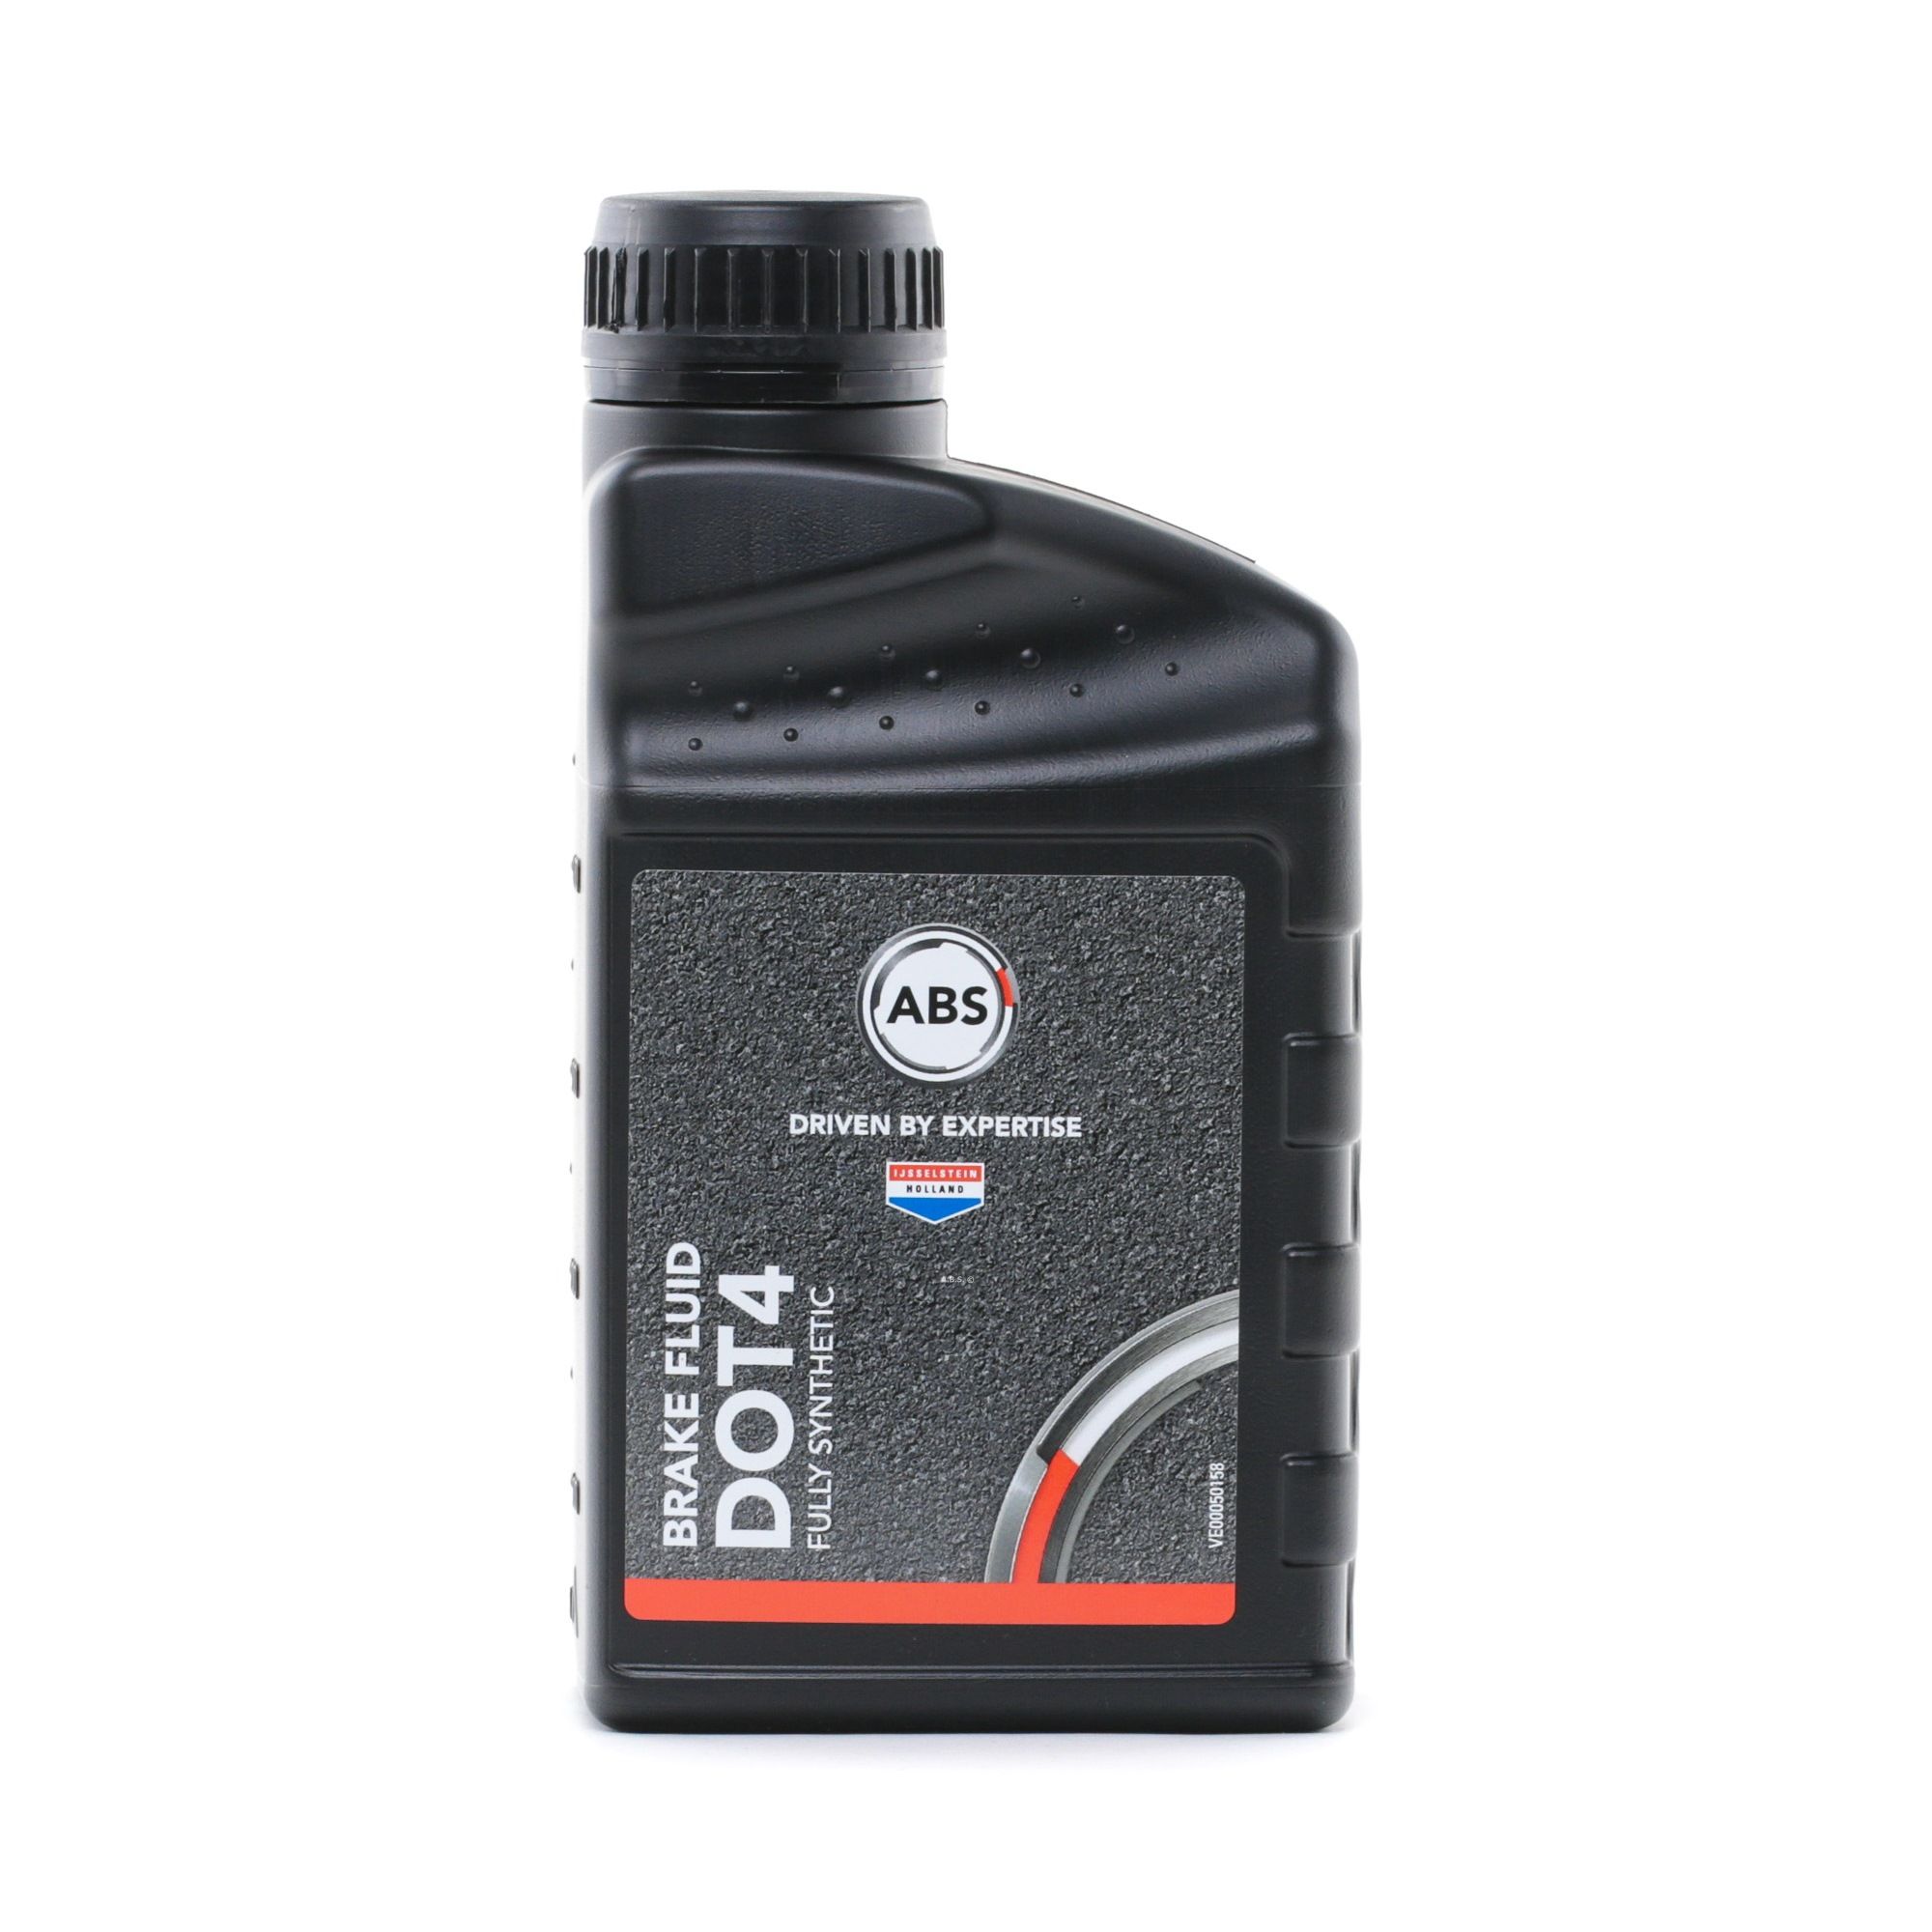 Original HONDA Mofa Öle & Flüssigkeiten Ersatzteile: Bremsflüssigkeit A.B.S. DOT 4 7500